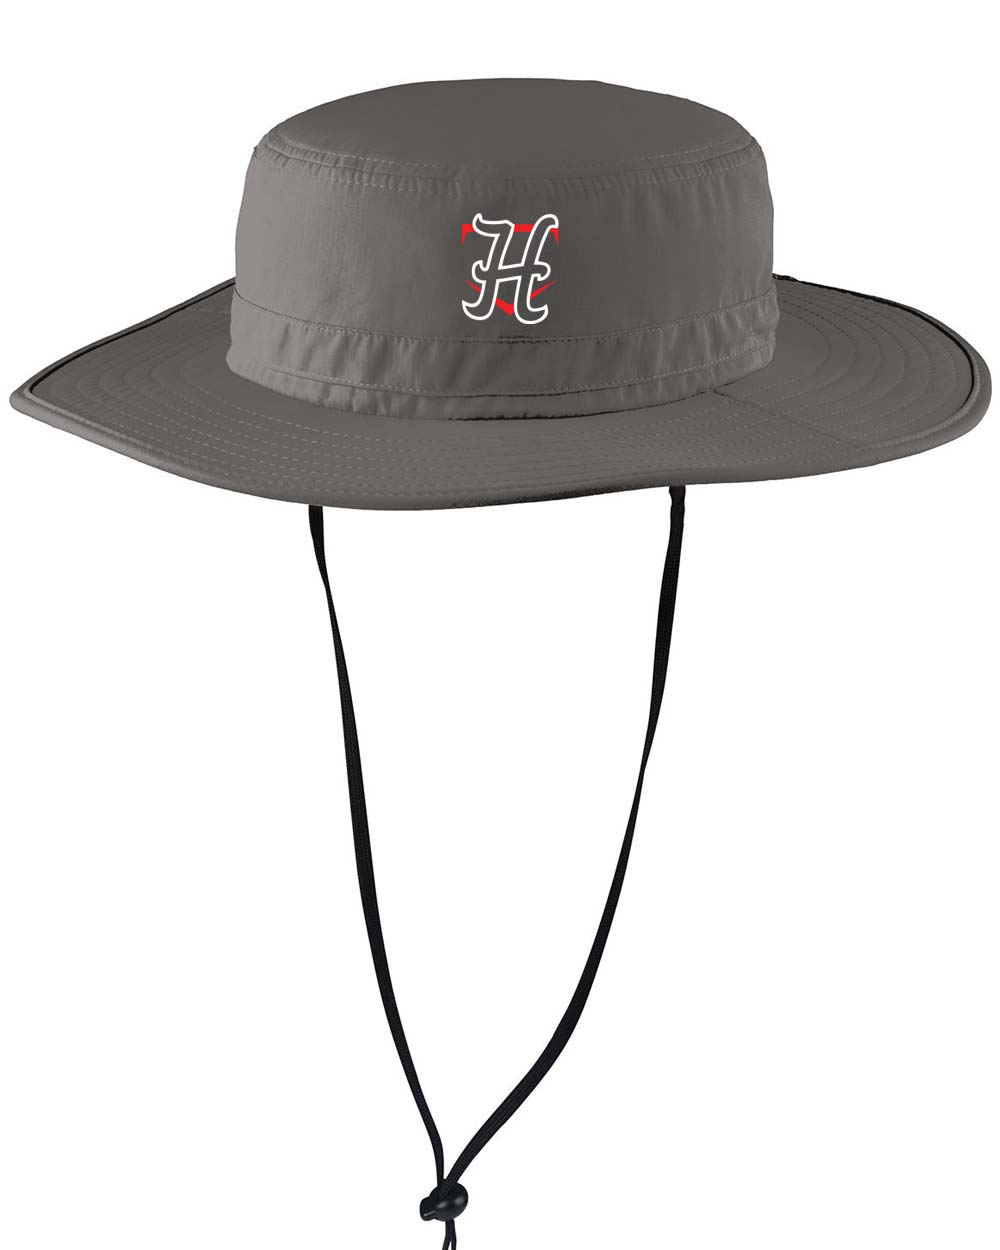 Hesston High School Baseball Wide Brim Hat - Atomic